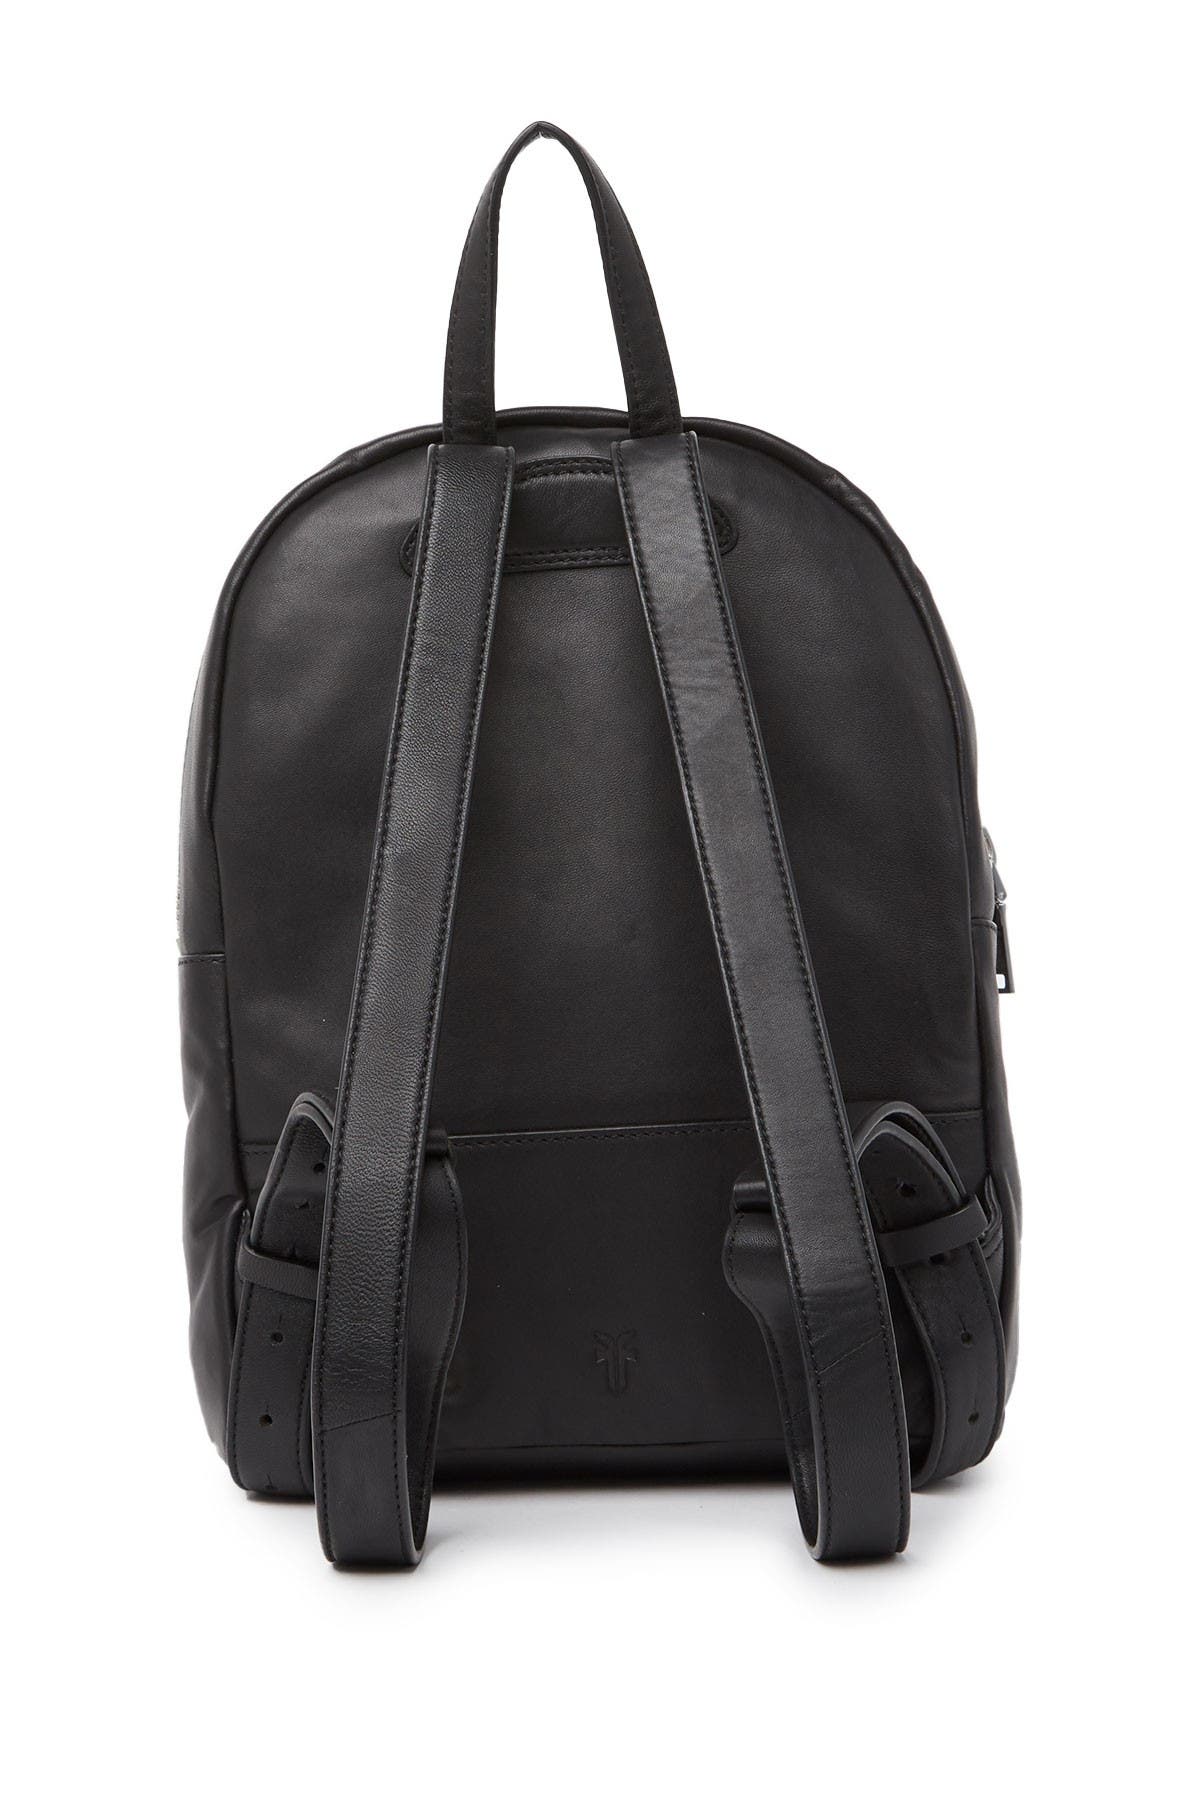 Frye | Lexi Leather Backpack | Nordstrom Rack